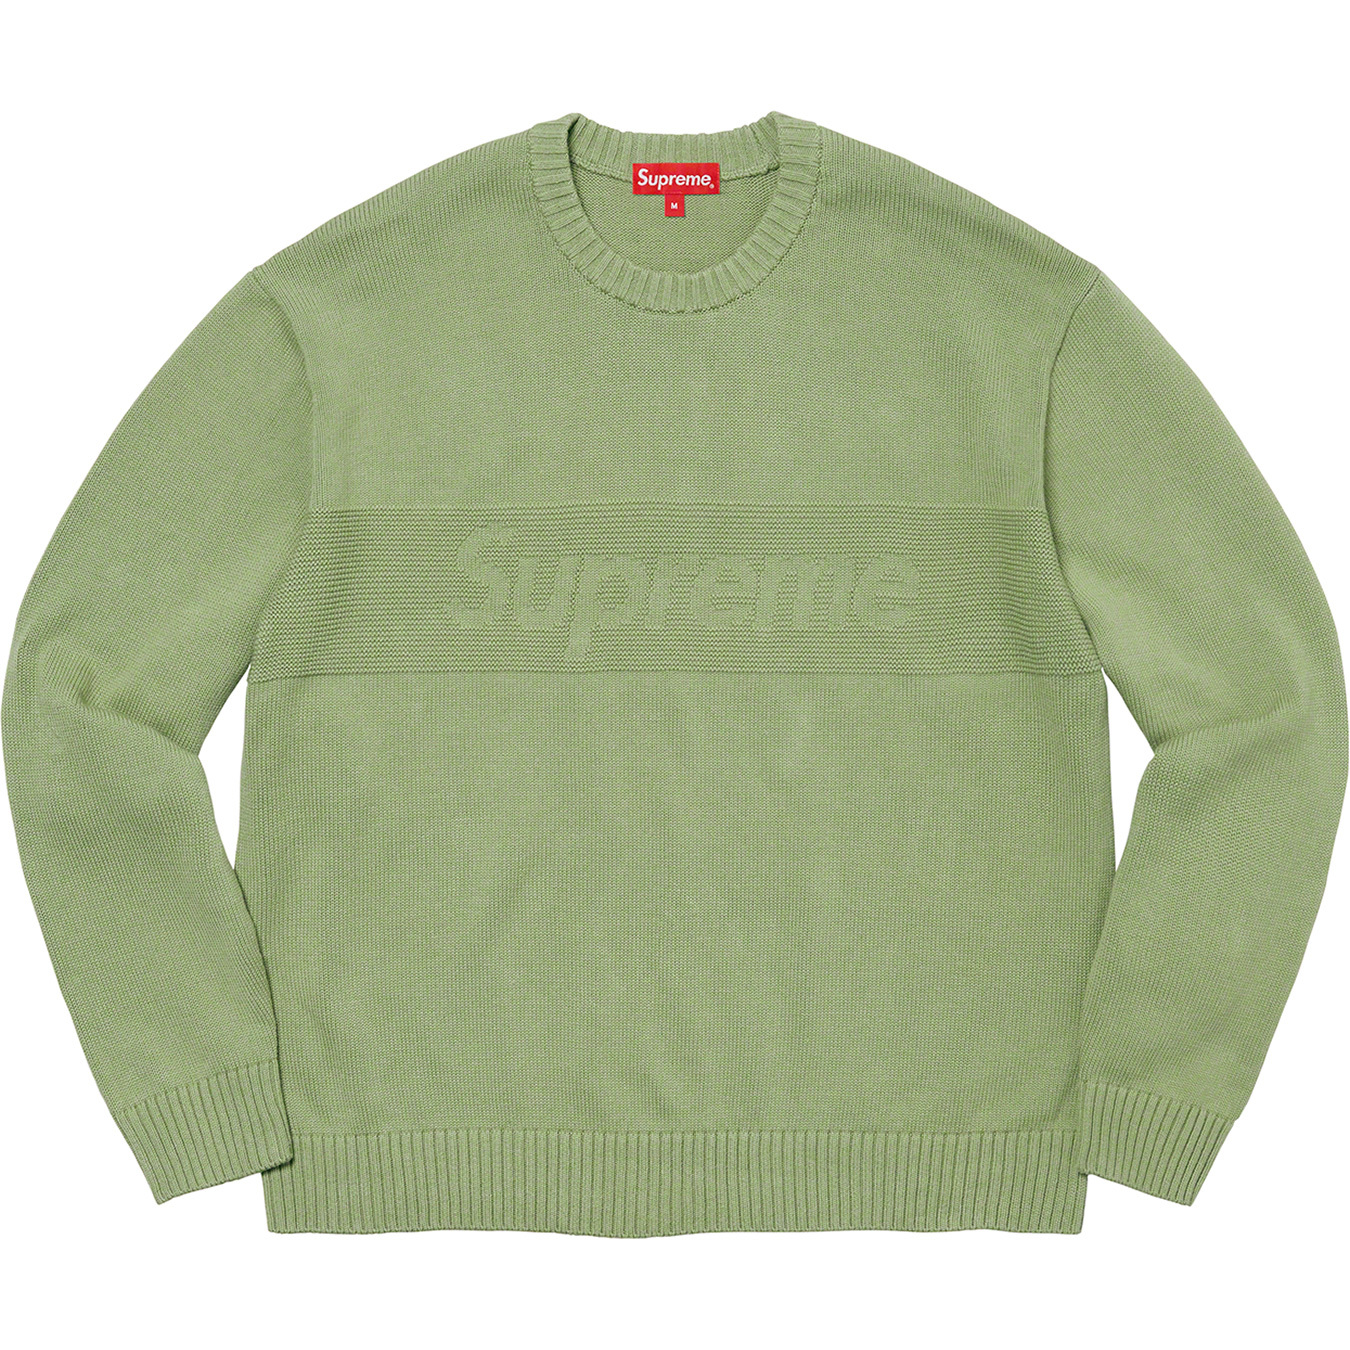 Supreme Tonal Paneled Sweater